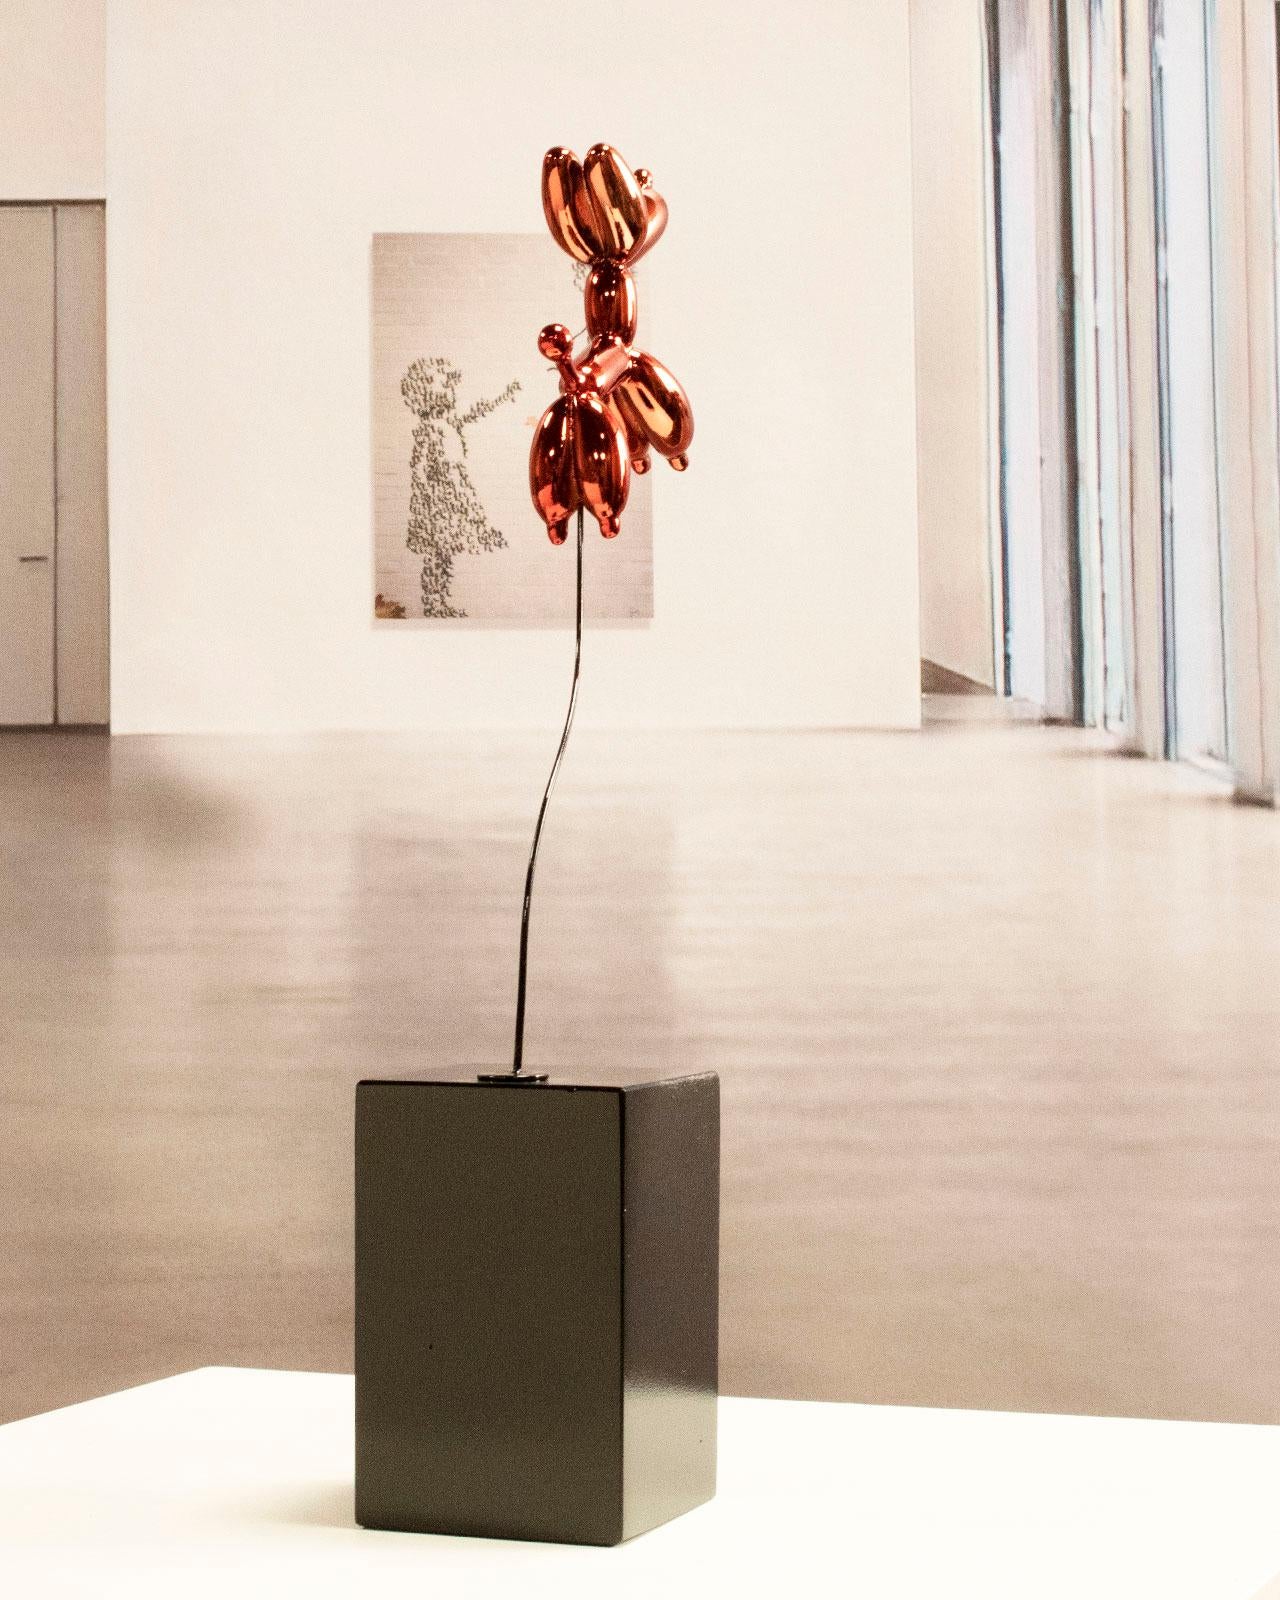 Weightless balloon dog red - Miguel Guía, Pop Art Nickel layer Sculpture For Sale 5